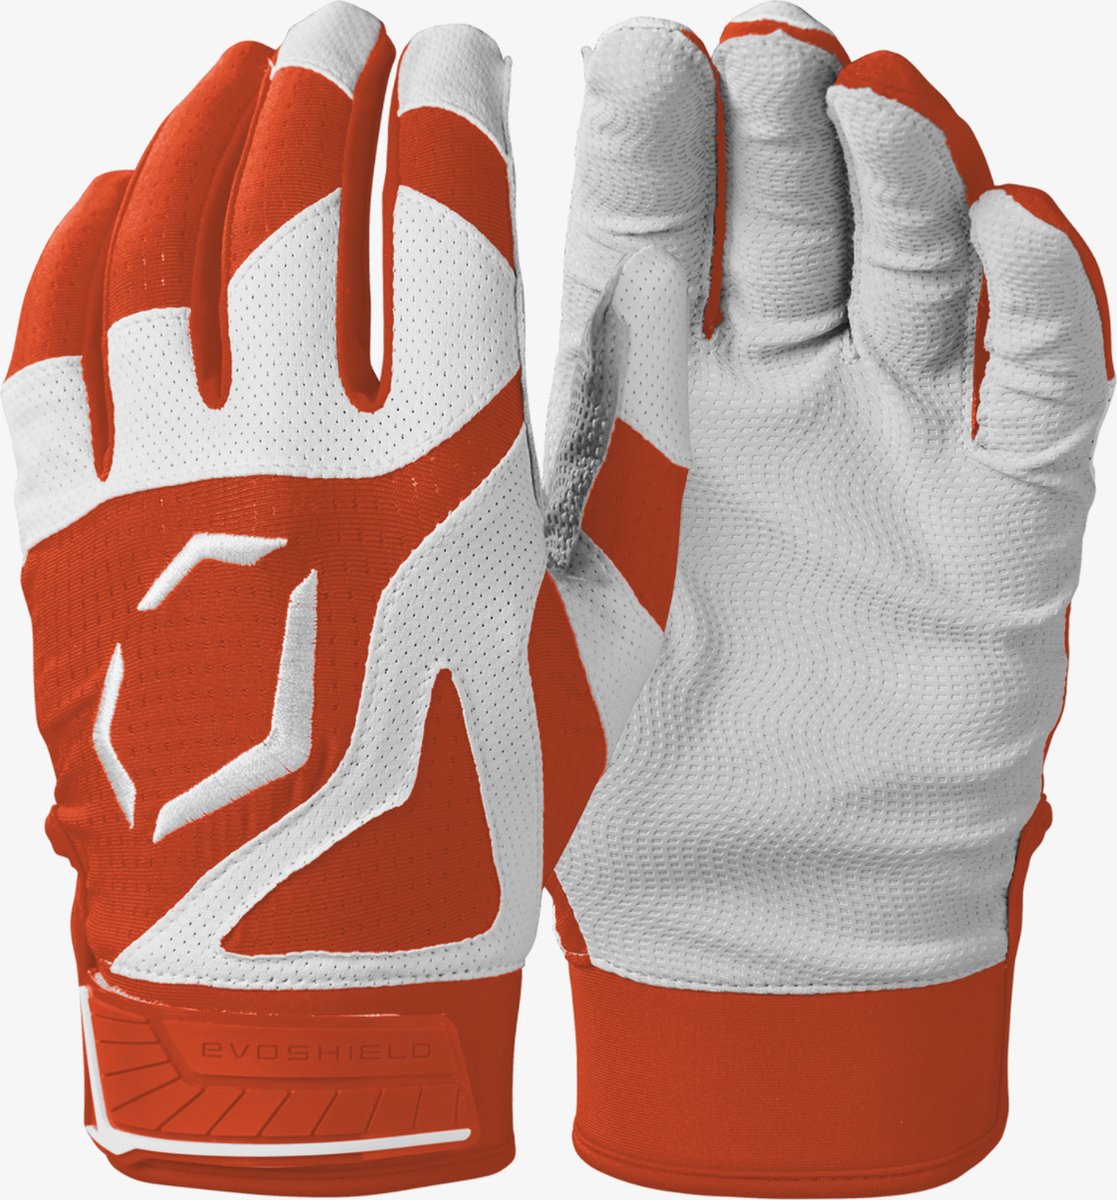 Evoshield SRZ-1 Batting Gloves - Orange - XL